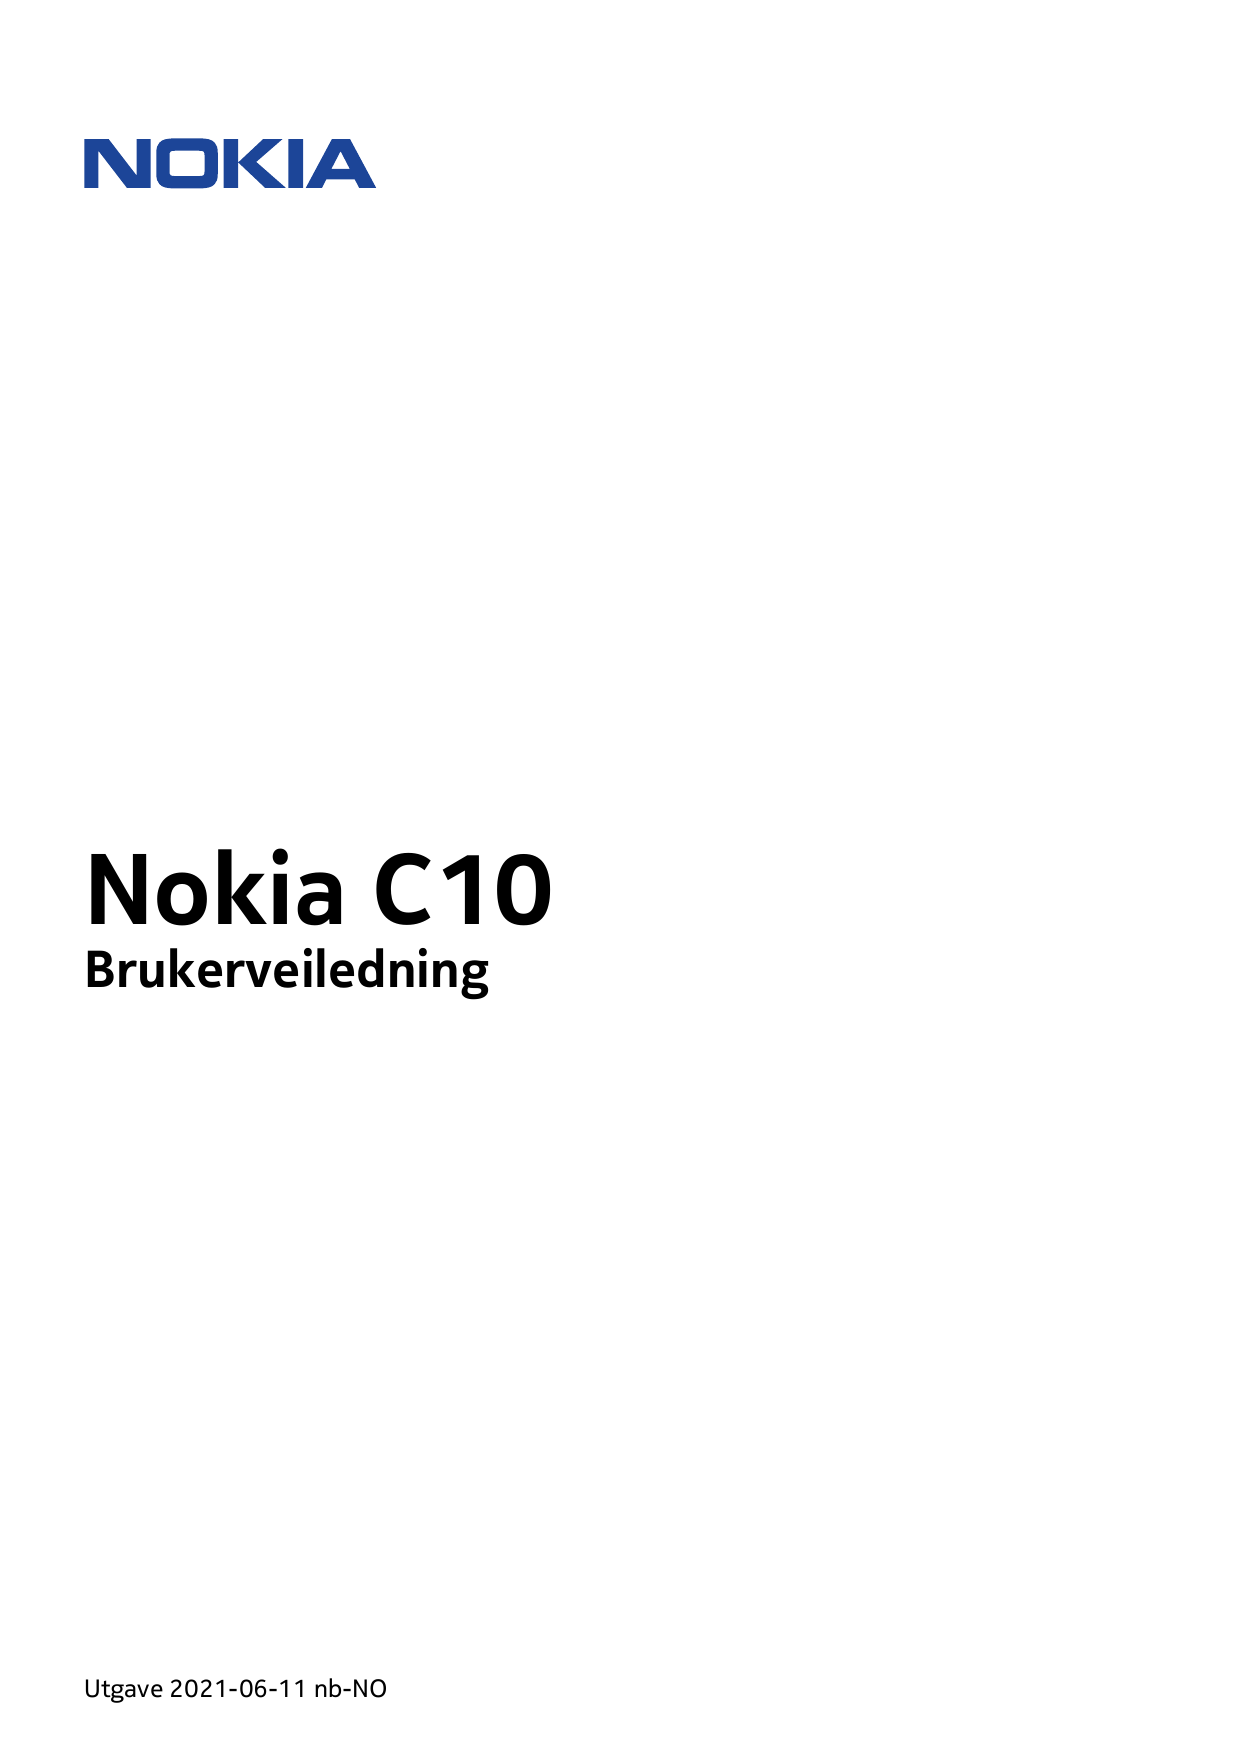 Nokia C10BrukerveiledningUtgave 2021-06-11 nb-NO